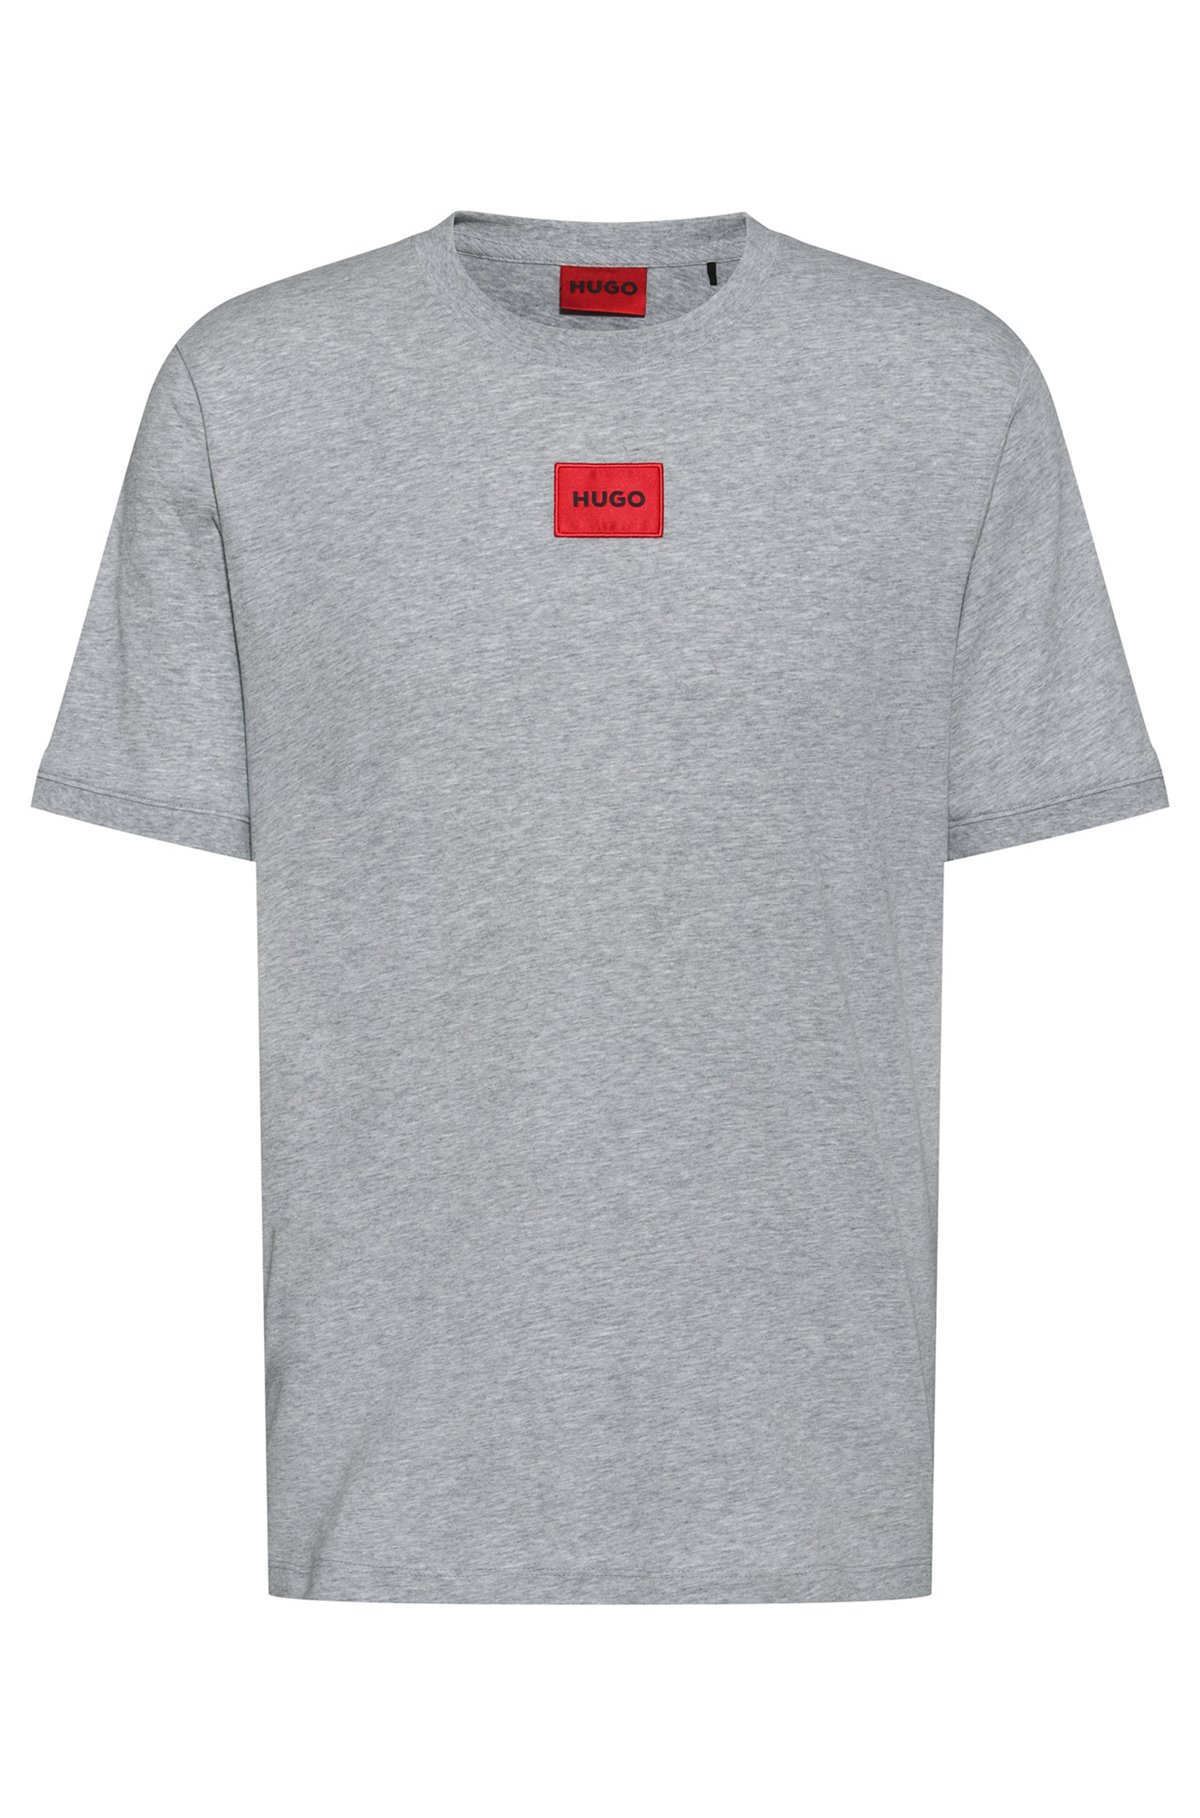 HUGO - Regular-fit cotton T-shirt with red logo label